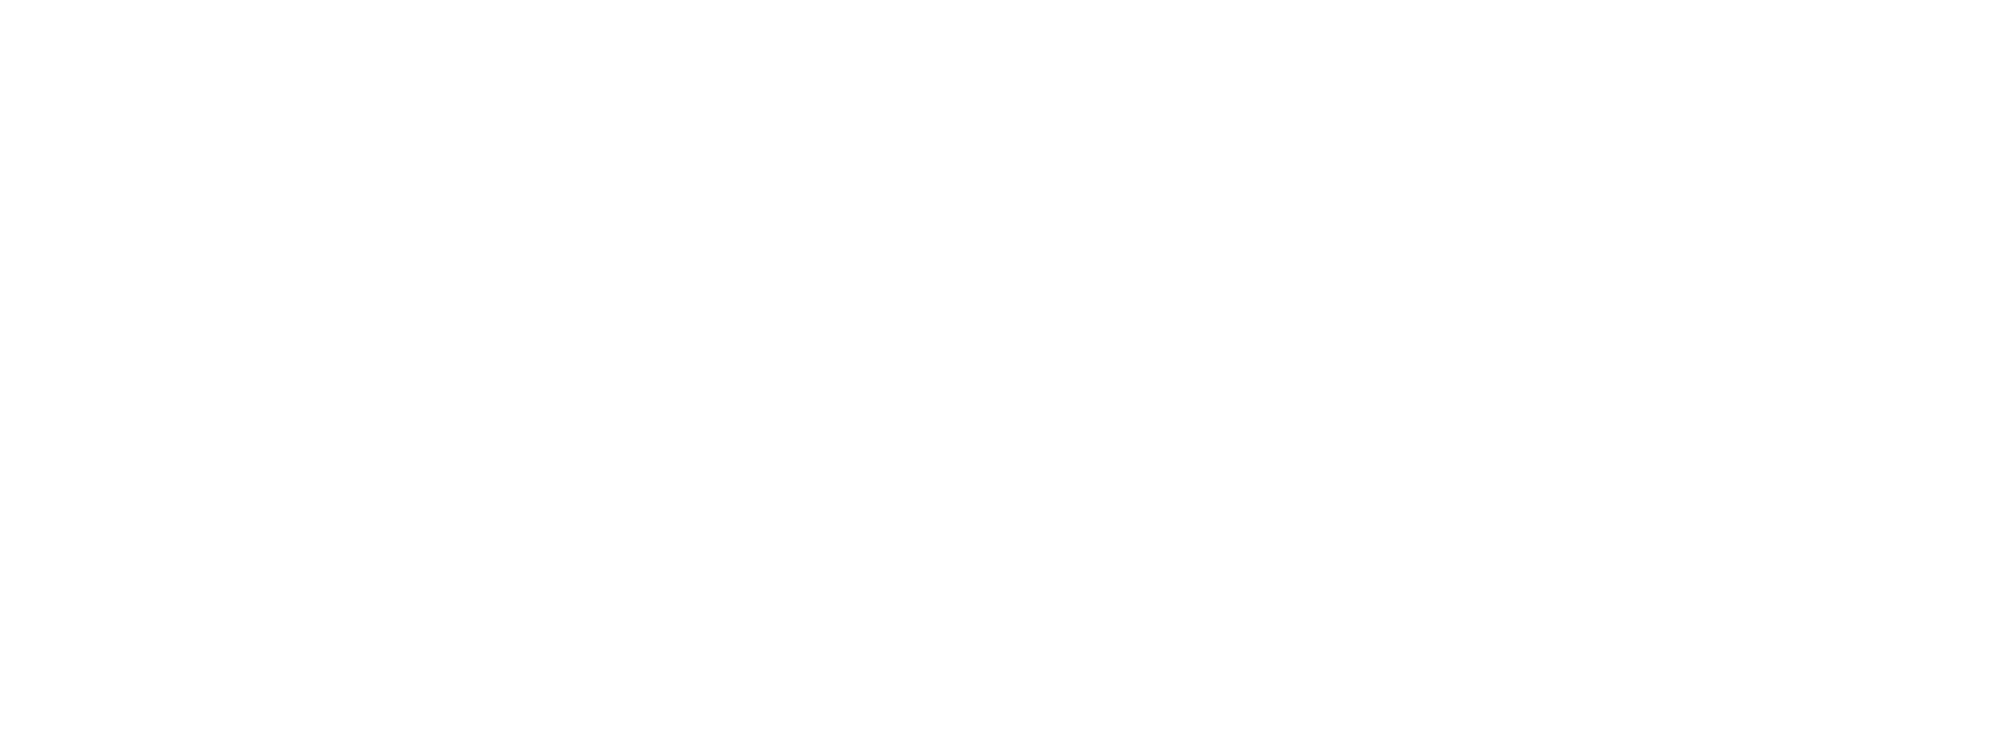 Calgary Health Foundation